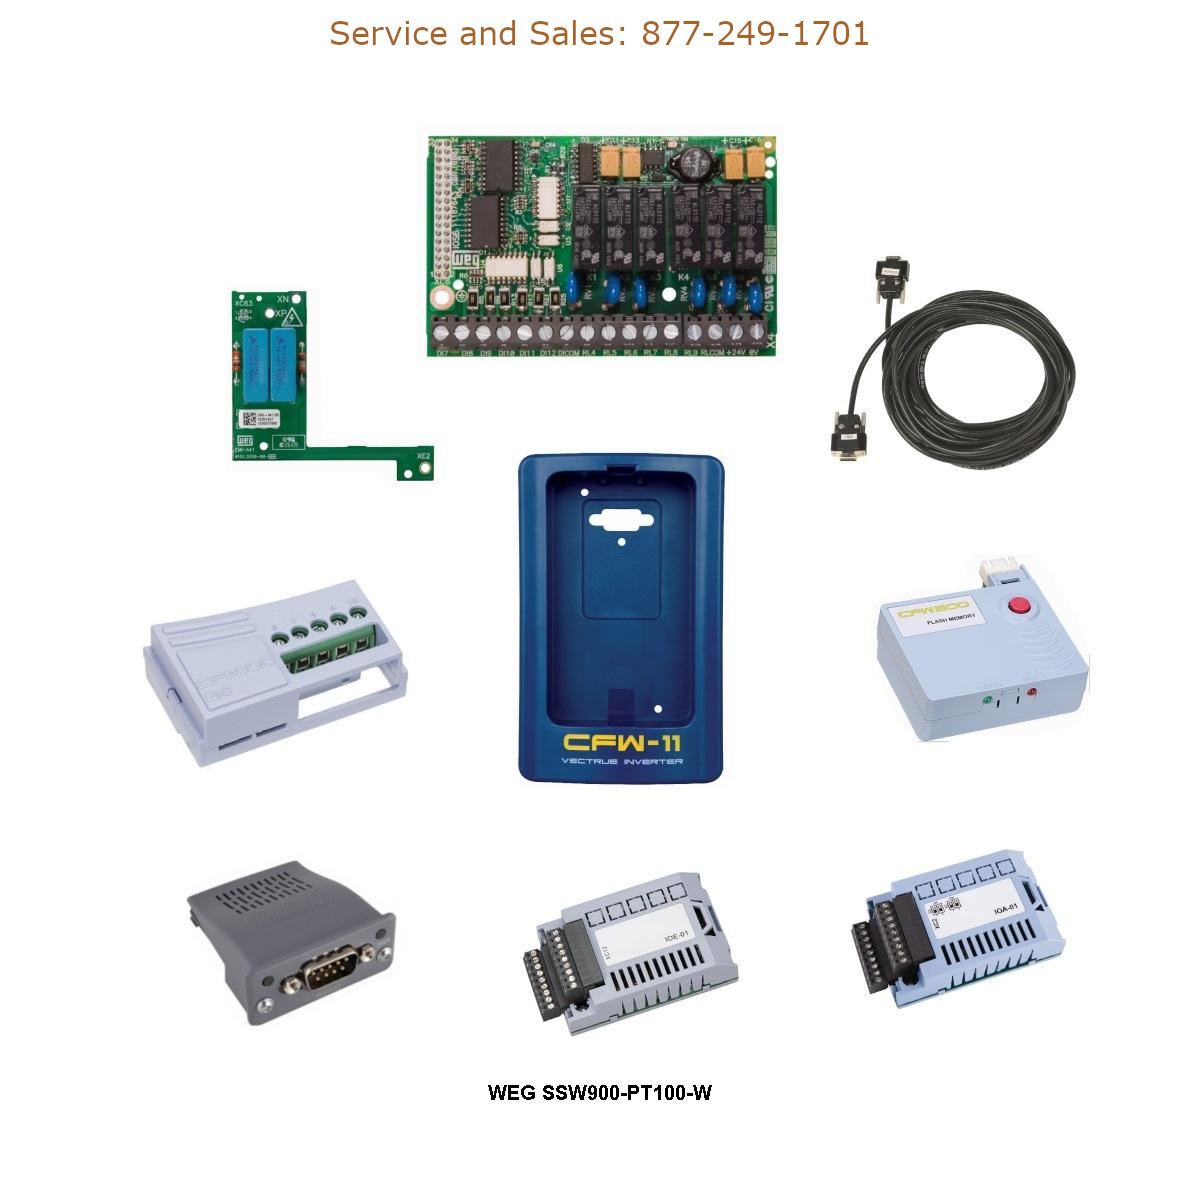 WEG SSW900-PT100-W WEG Model Number SSW900-PT100-W WEG Drives, Accessories for Drives Repair Service, Troubleshooting, Replacement Parts https://gesrepair.com/wp-content/uploads/2022/WEG/WEG_SSW900-PT100-W_Drives_Accessories_for_Drives.jpg